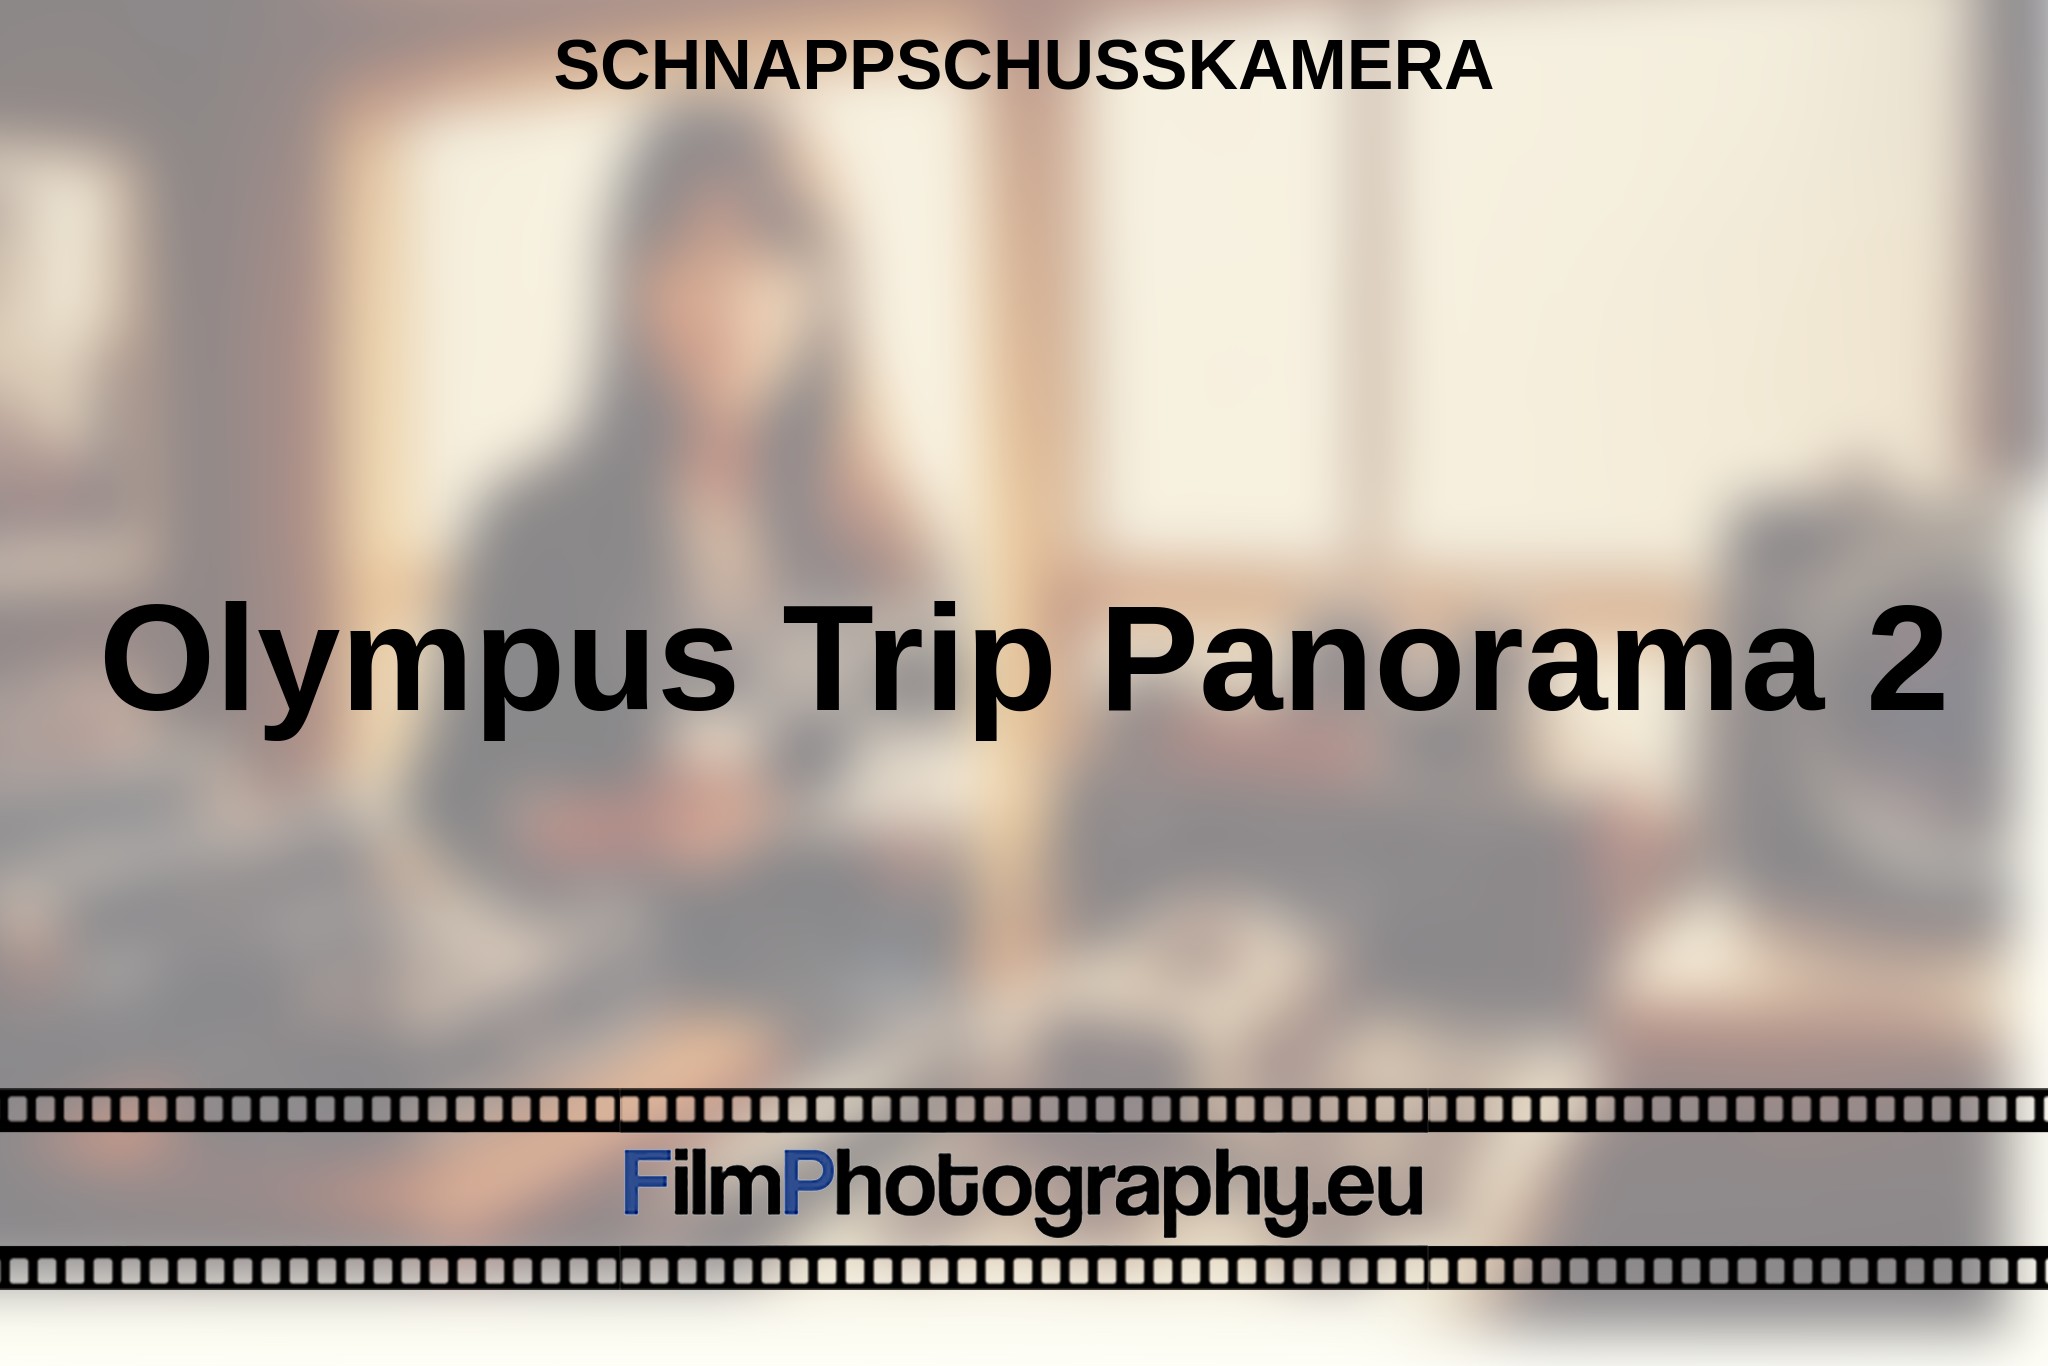 olympus-trip-panorama-2-schnappschusskamera-bnv.jpg